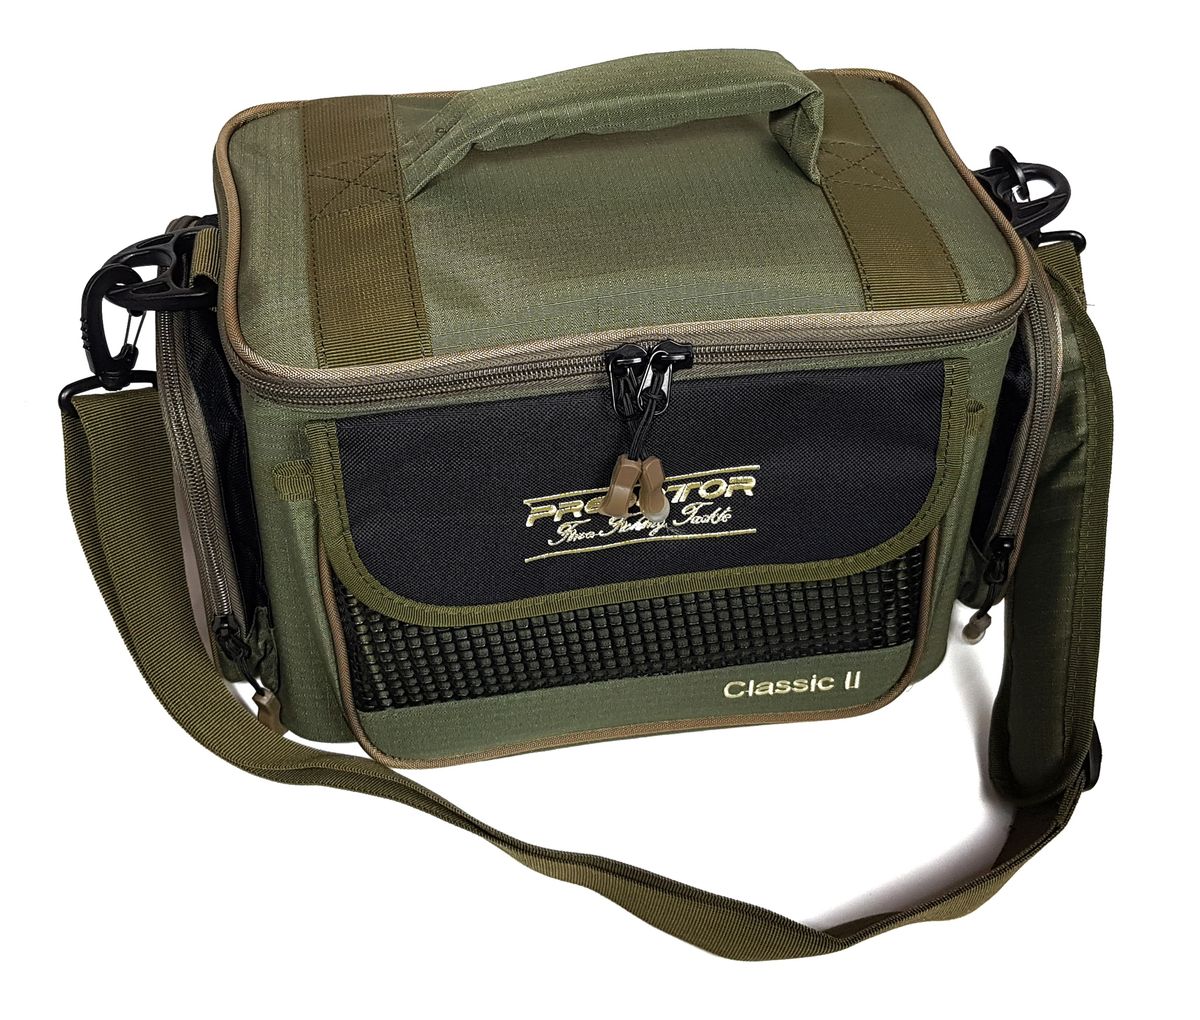 Predator ClassicII Fishing Tackle Bag, Shop Today. Get it Tomorrow!